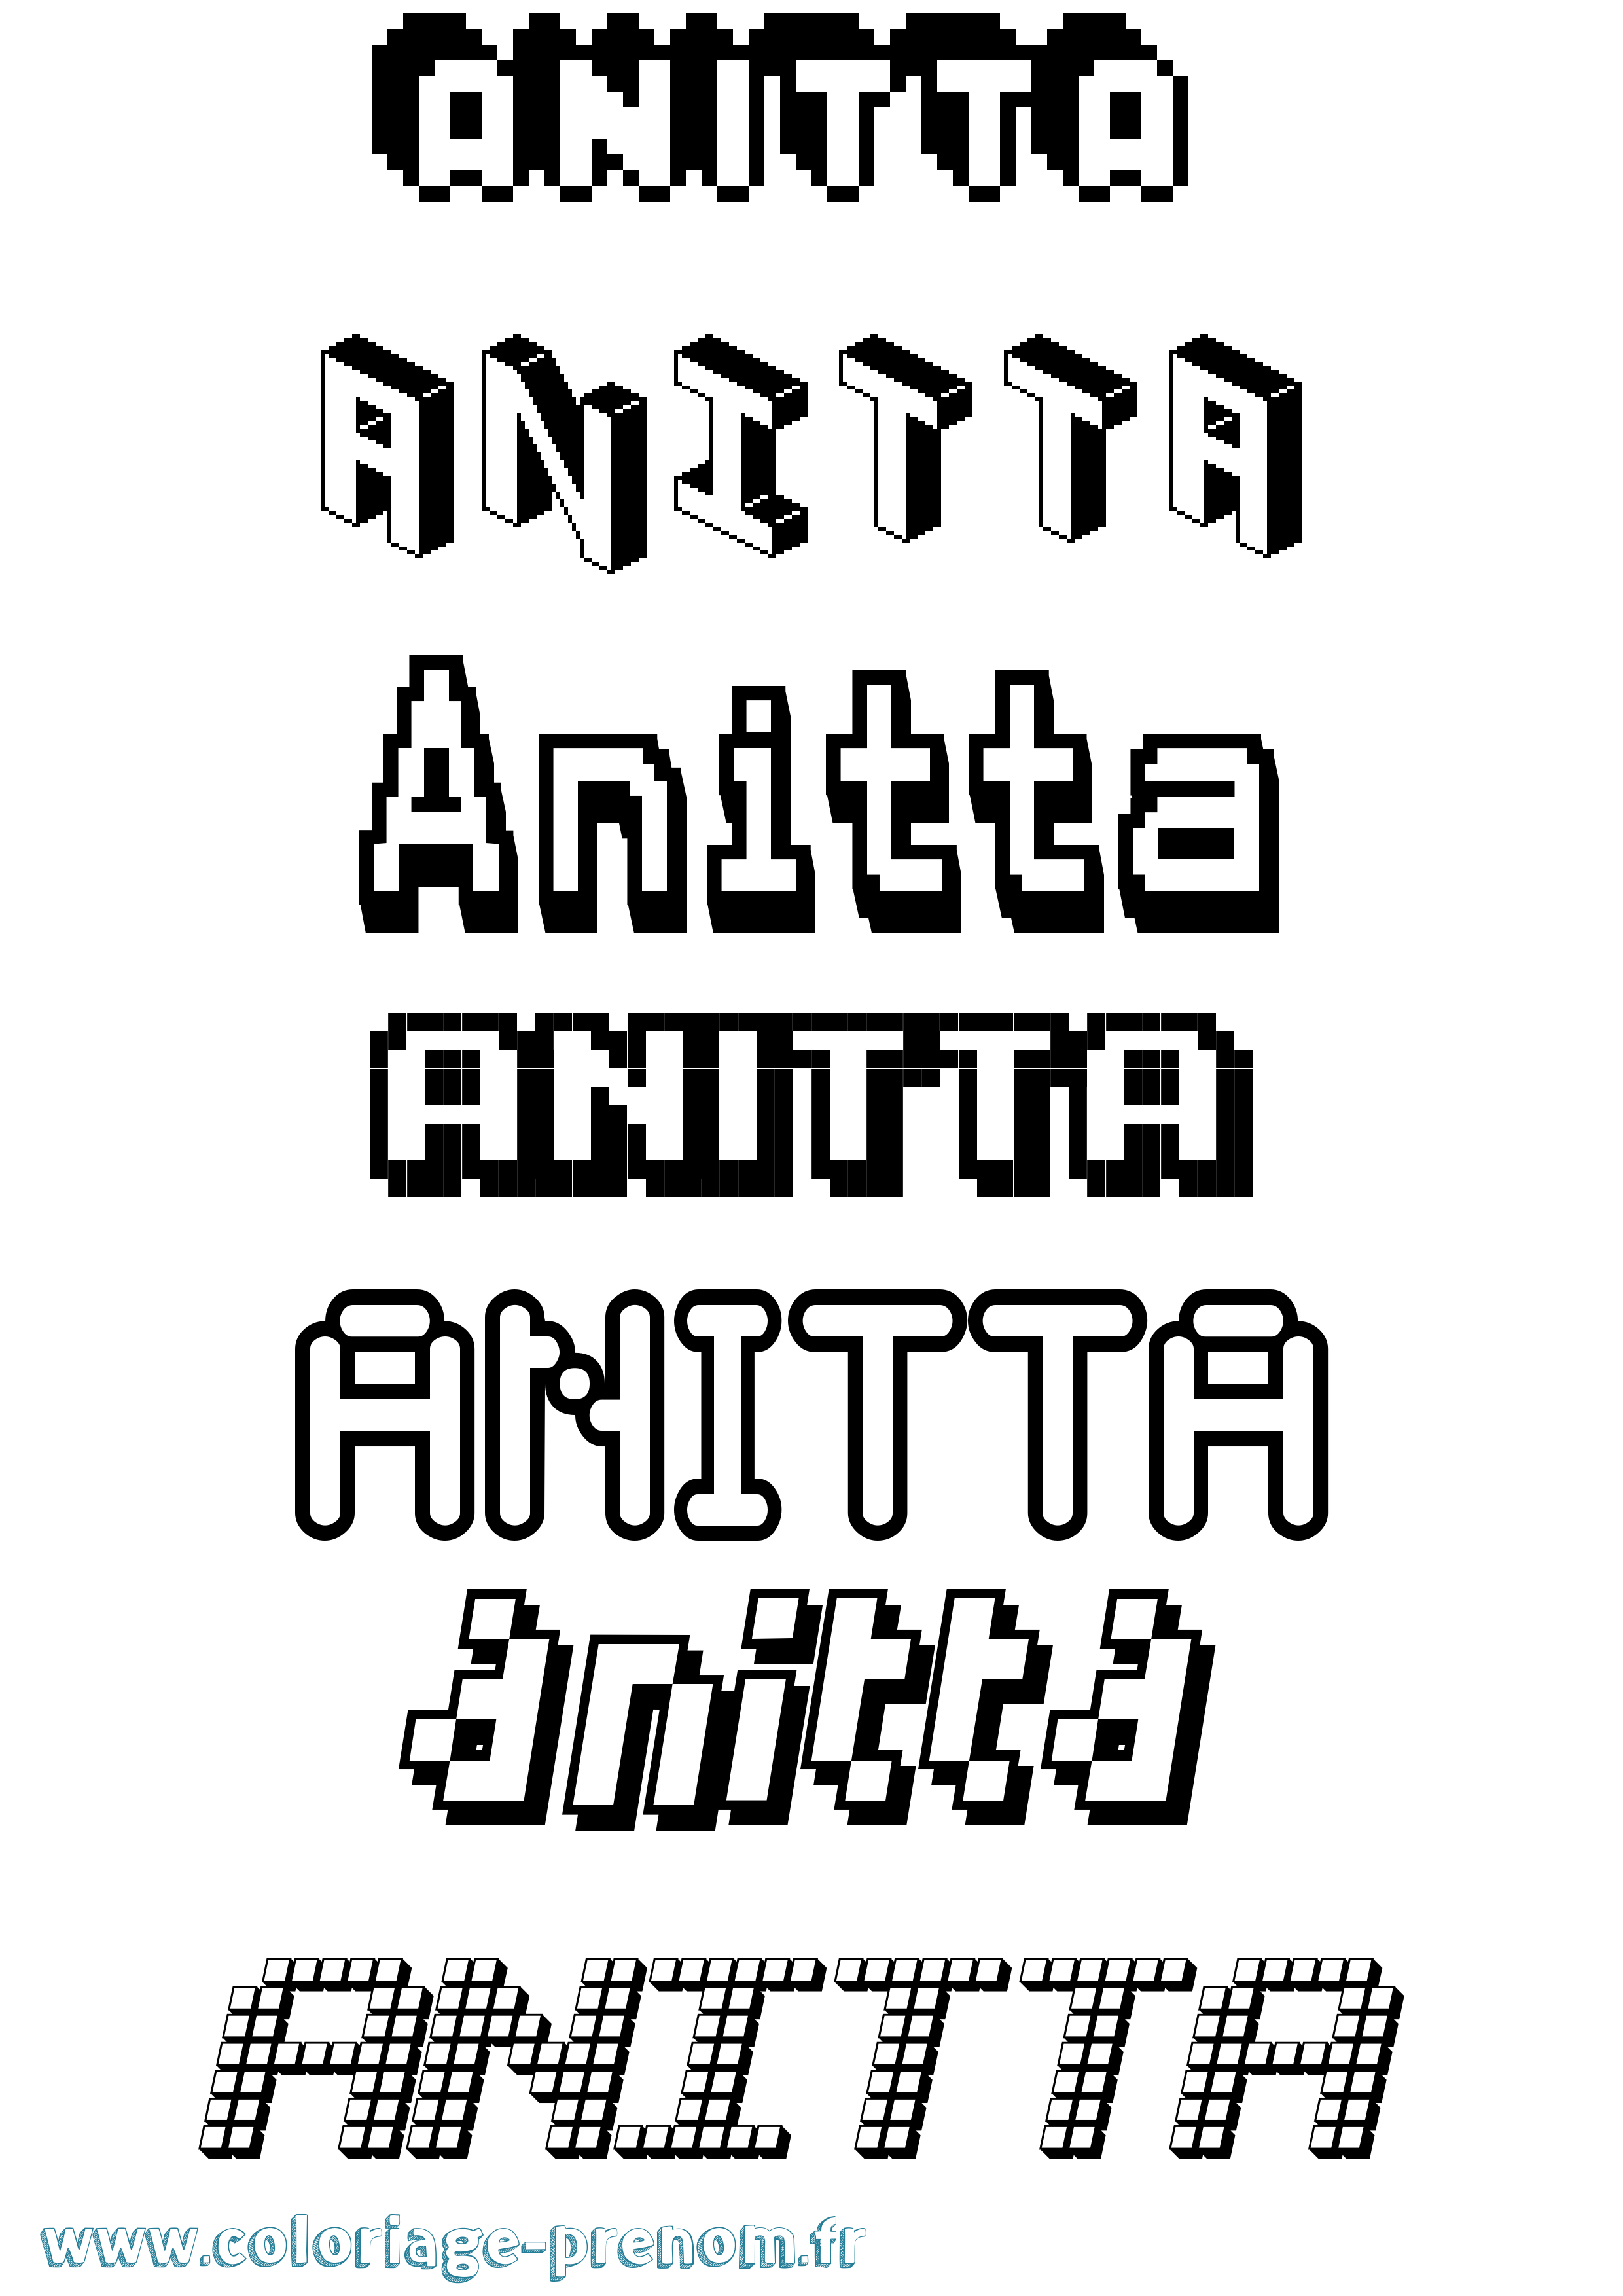 Coloriage prénom Anitta Pixel